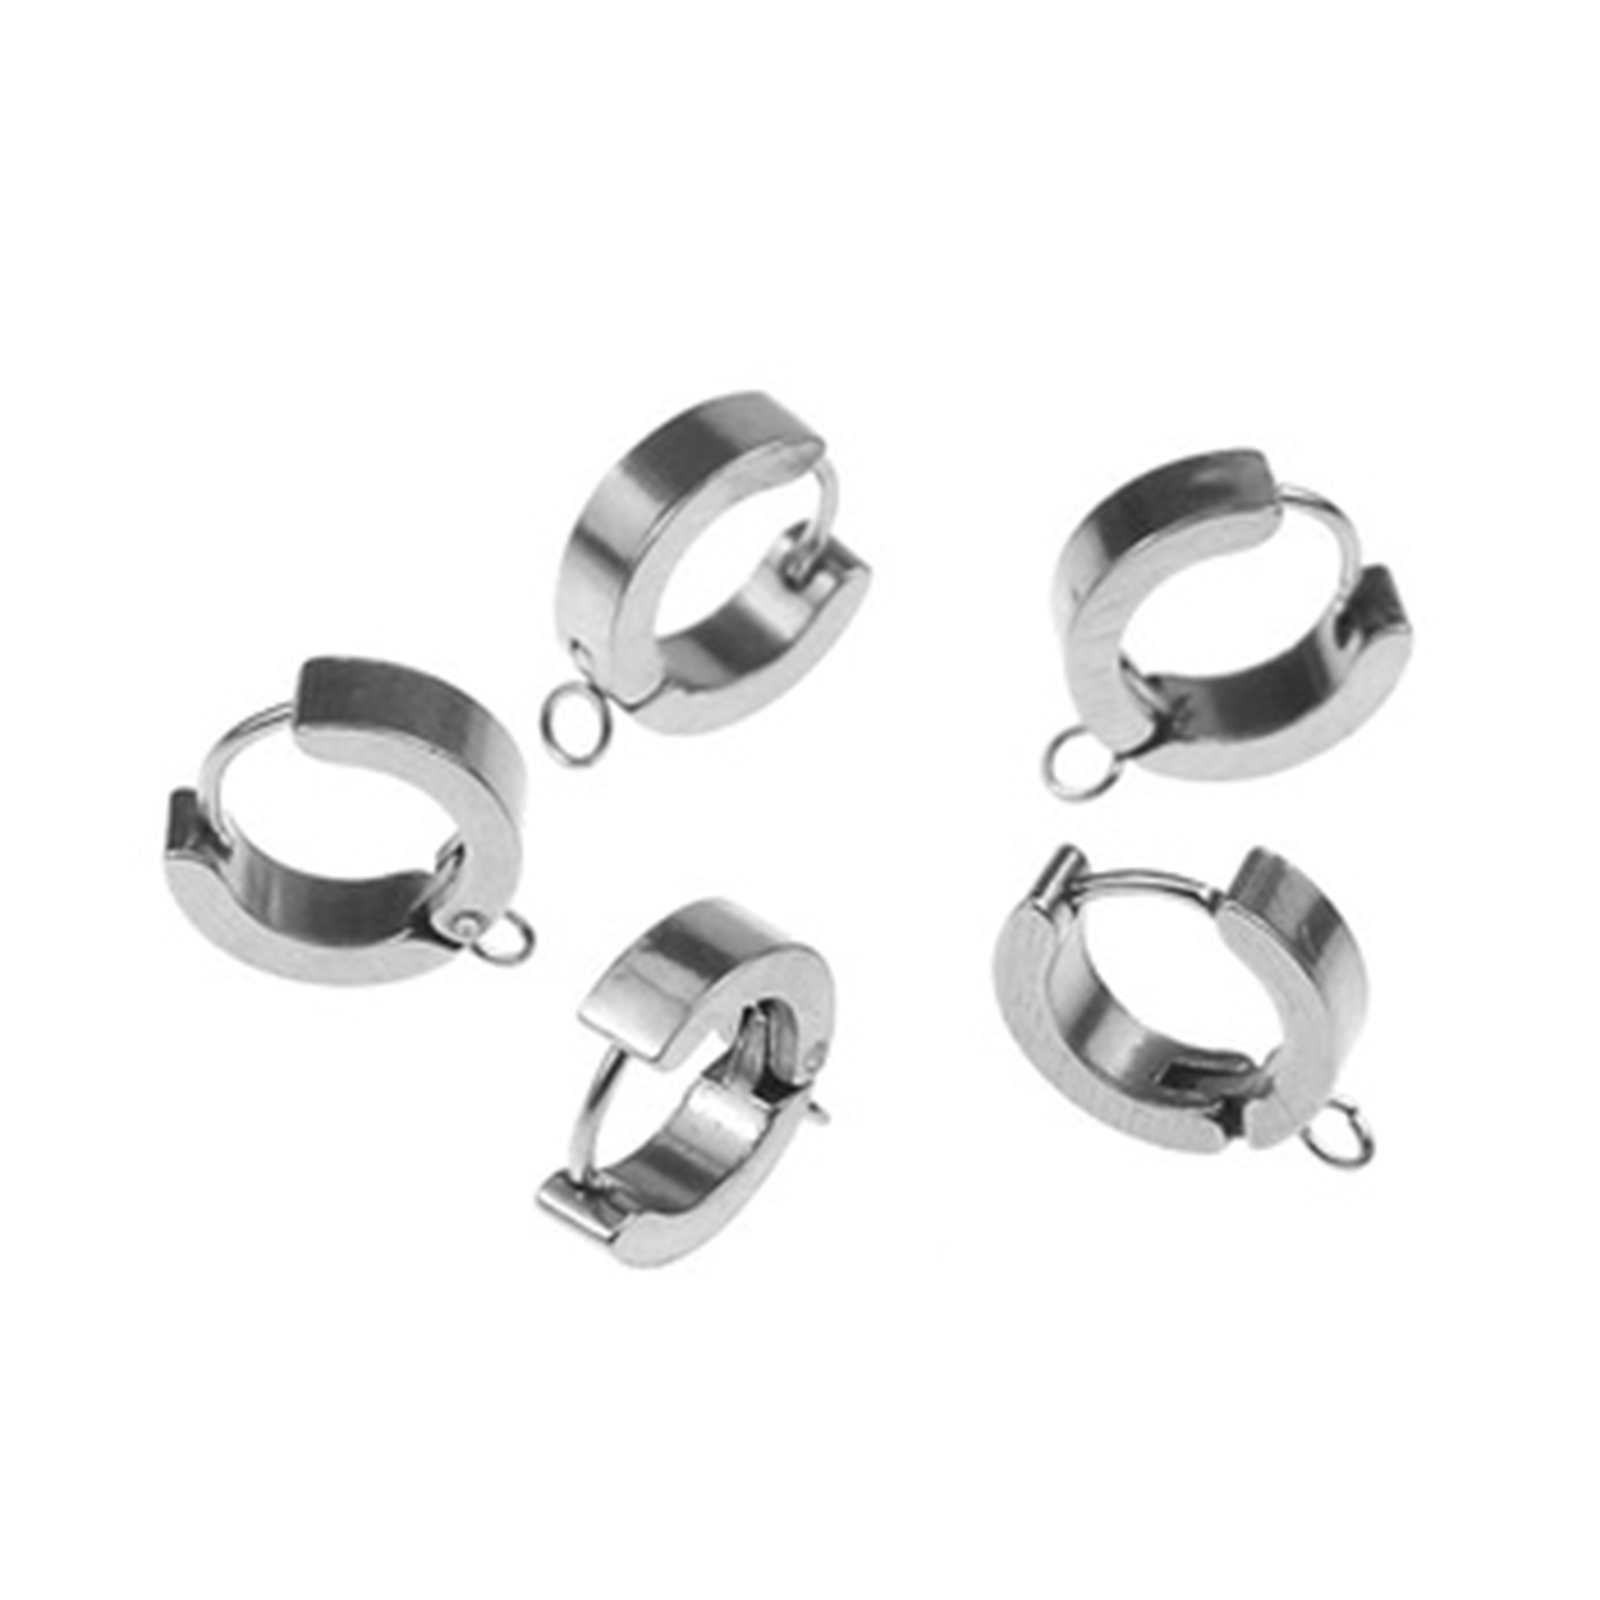 Picture of Stainless Steel Hoop Earrings Round Silver Tone W/ Loop 15mm x 14mm, 6 PCs